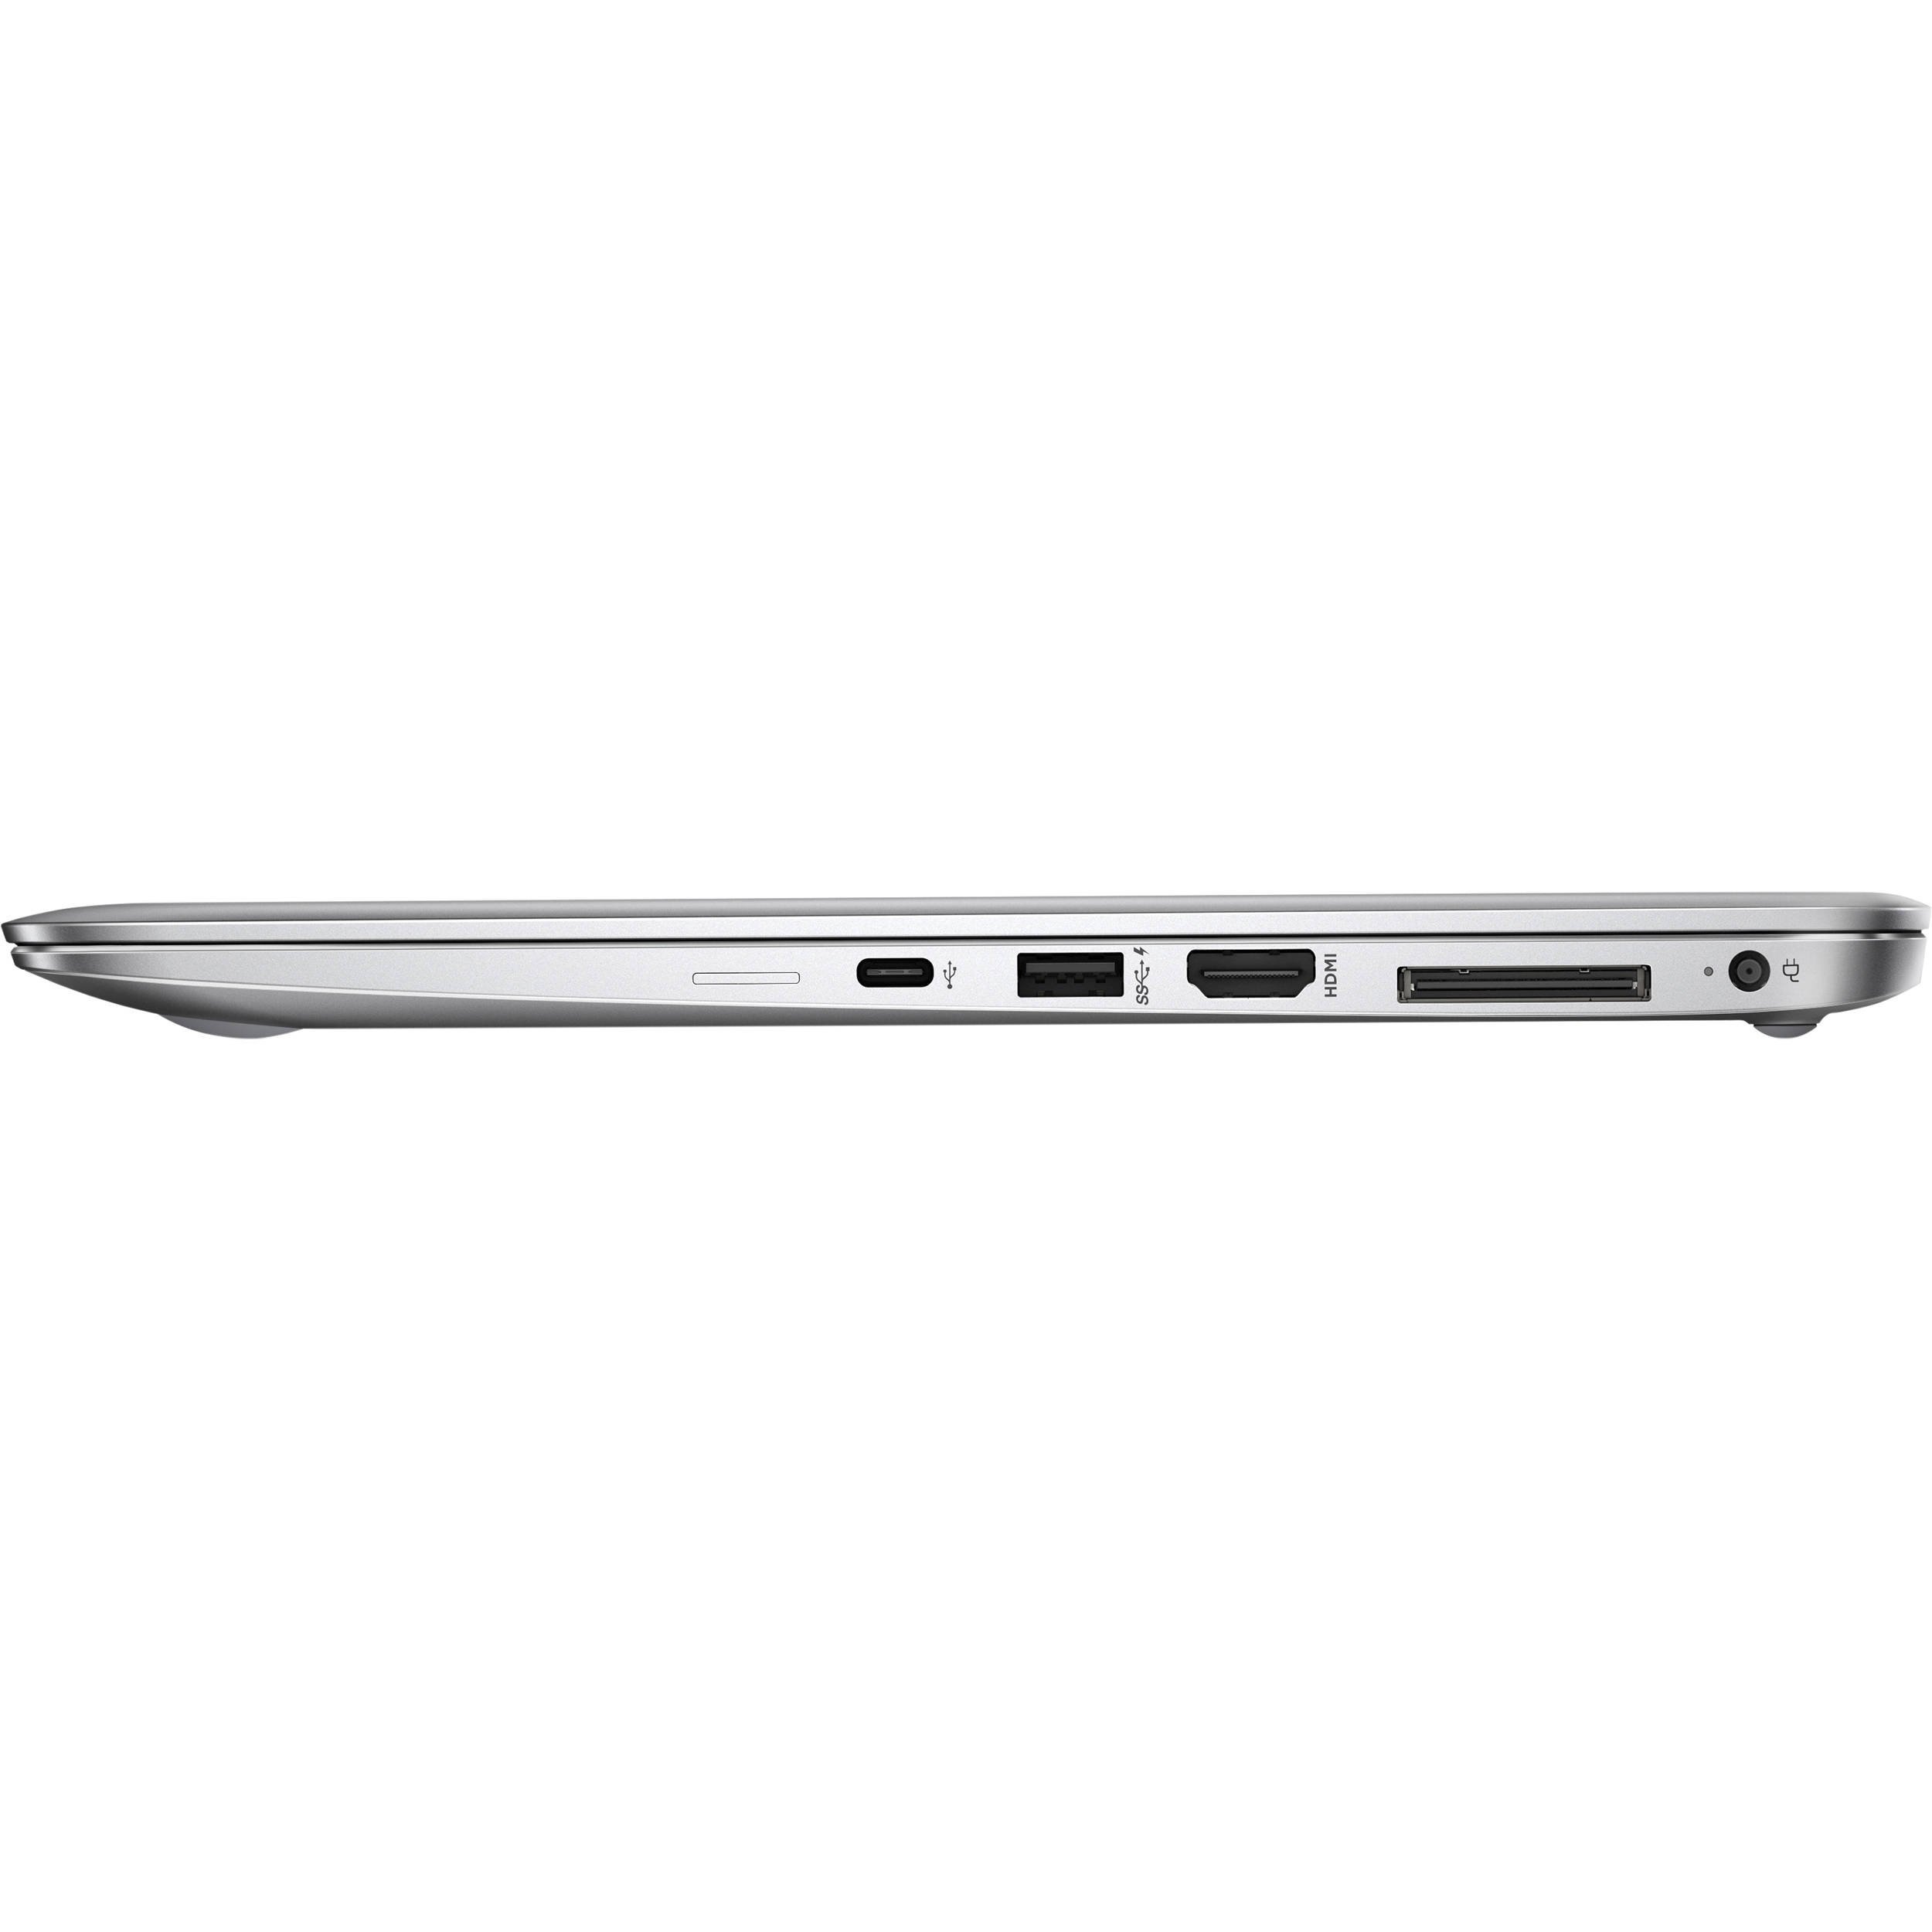  Ноутбук HP EliteBook 1040 G3 (Y8R05EA) фото10